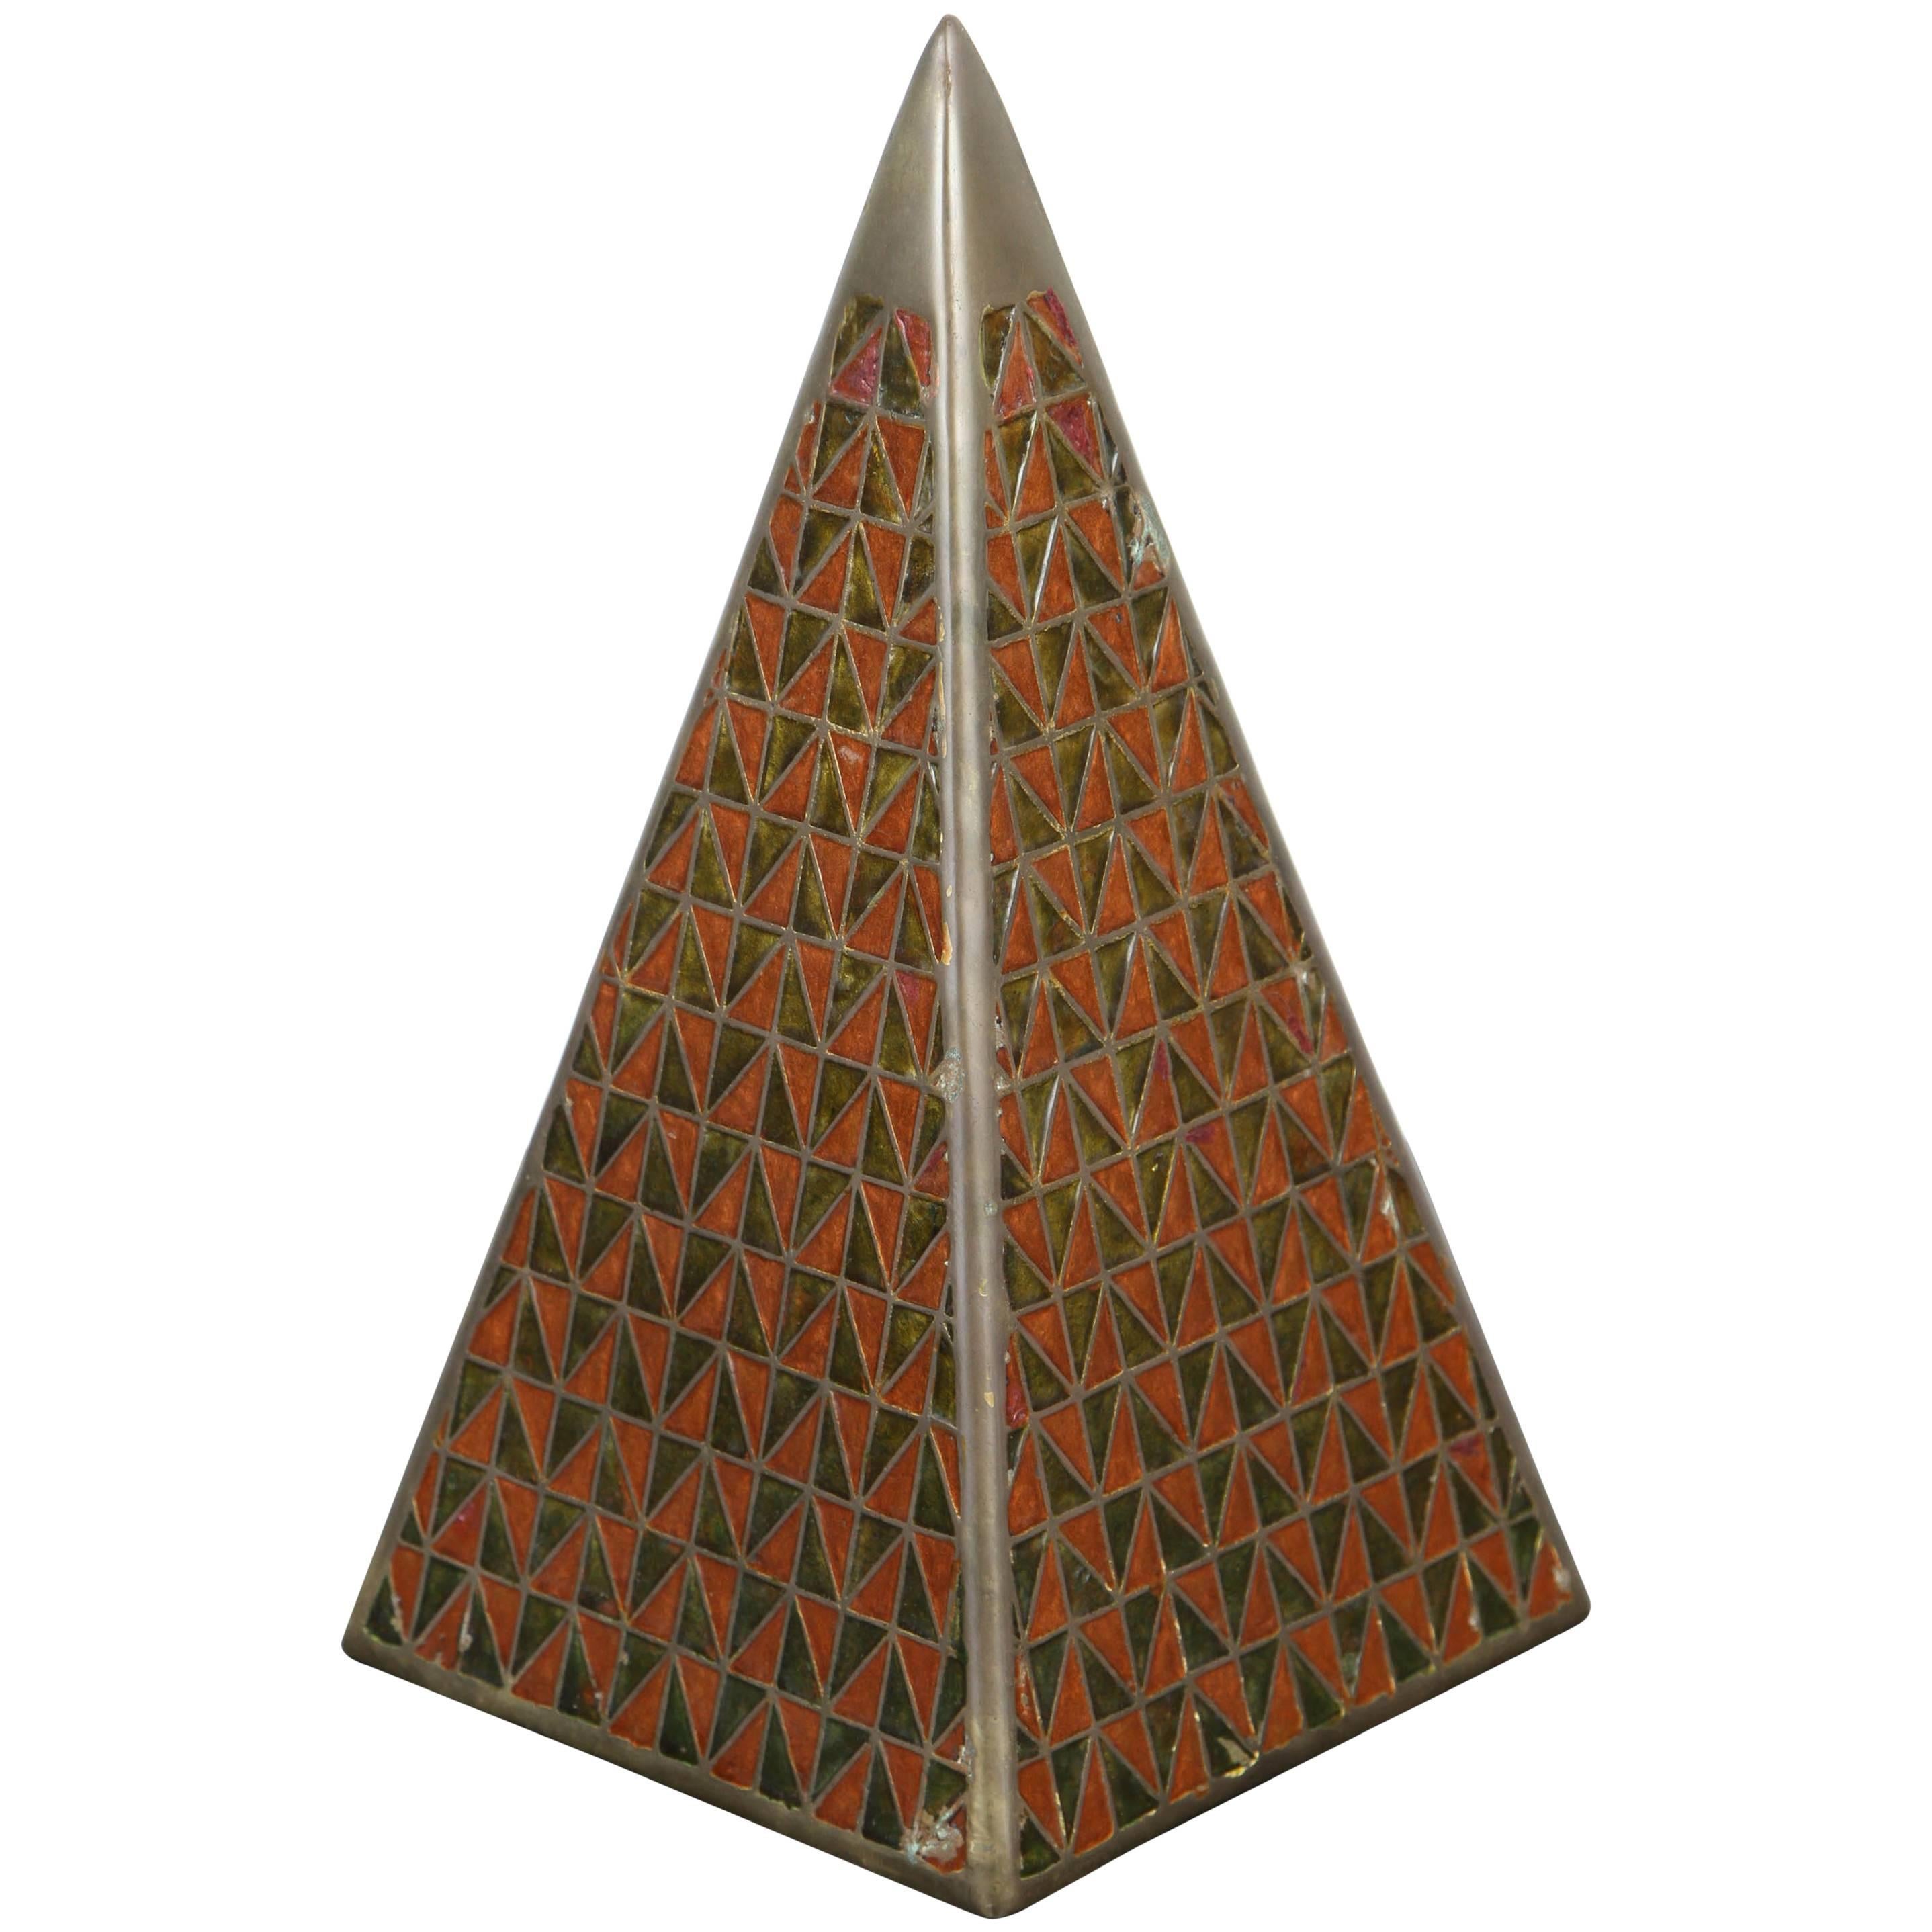 Enameled Pyramid by Raymor